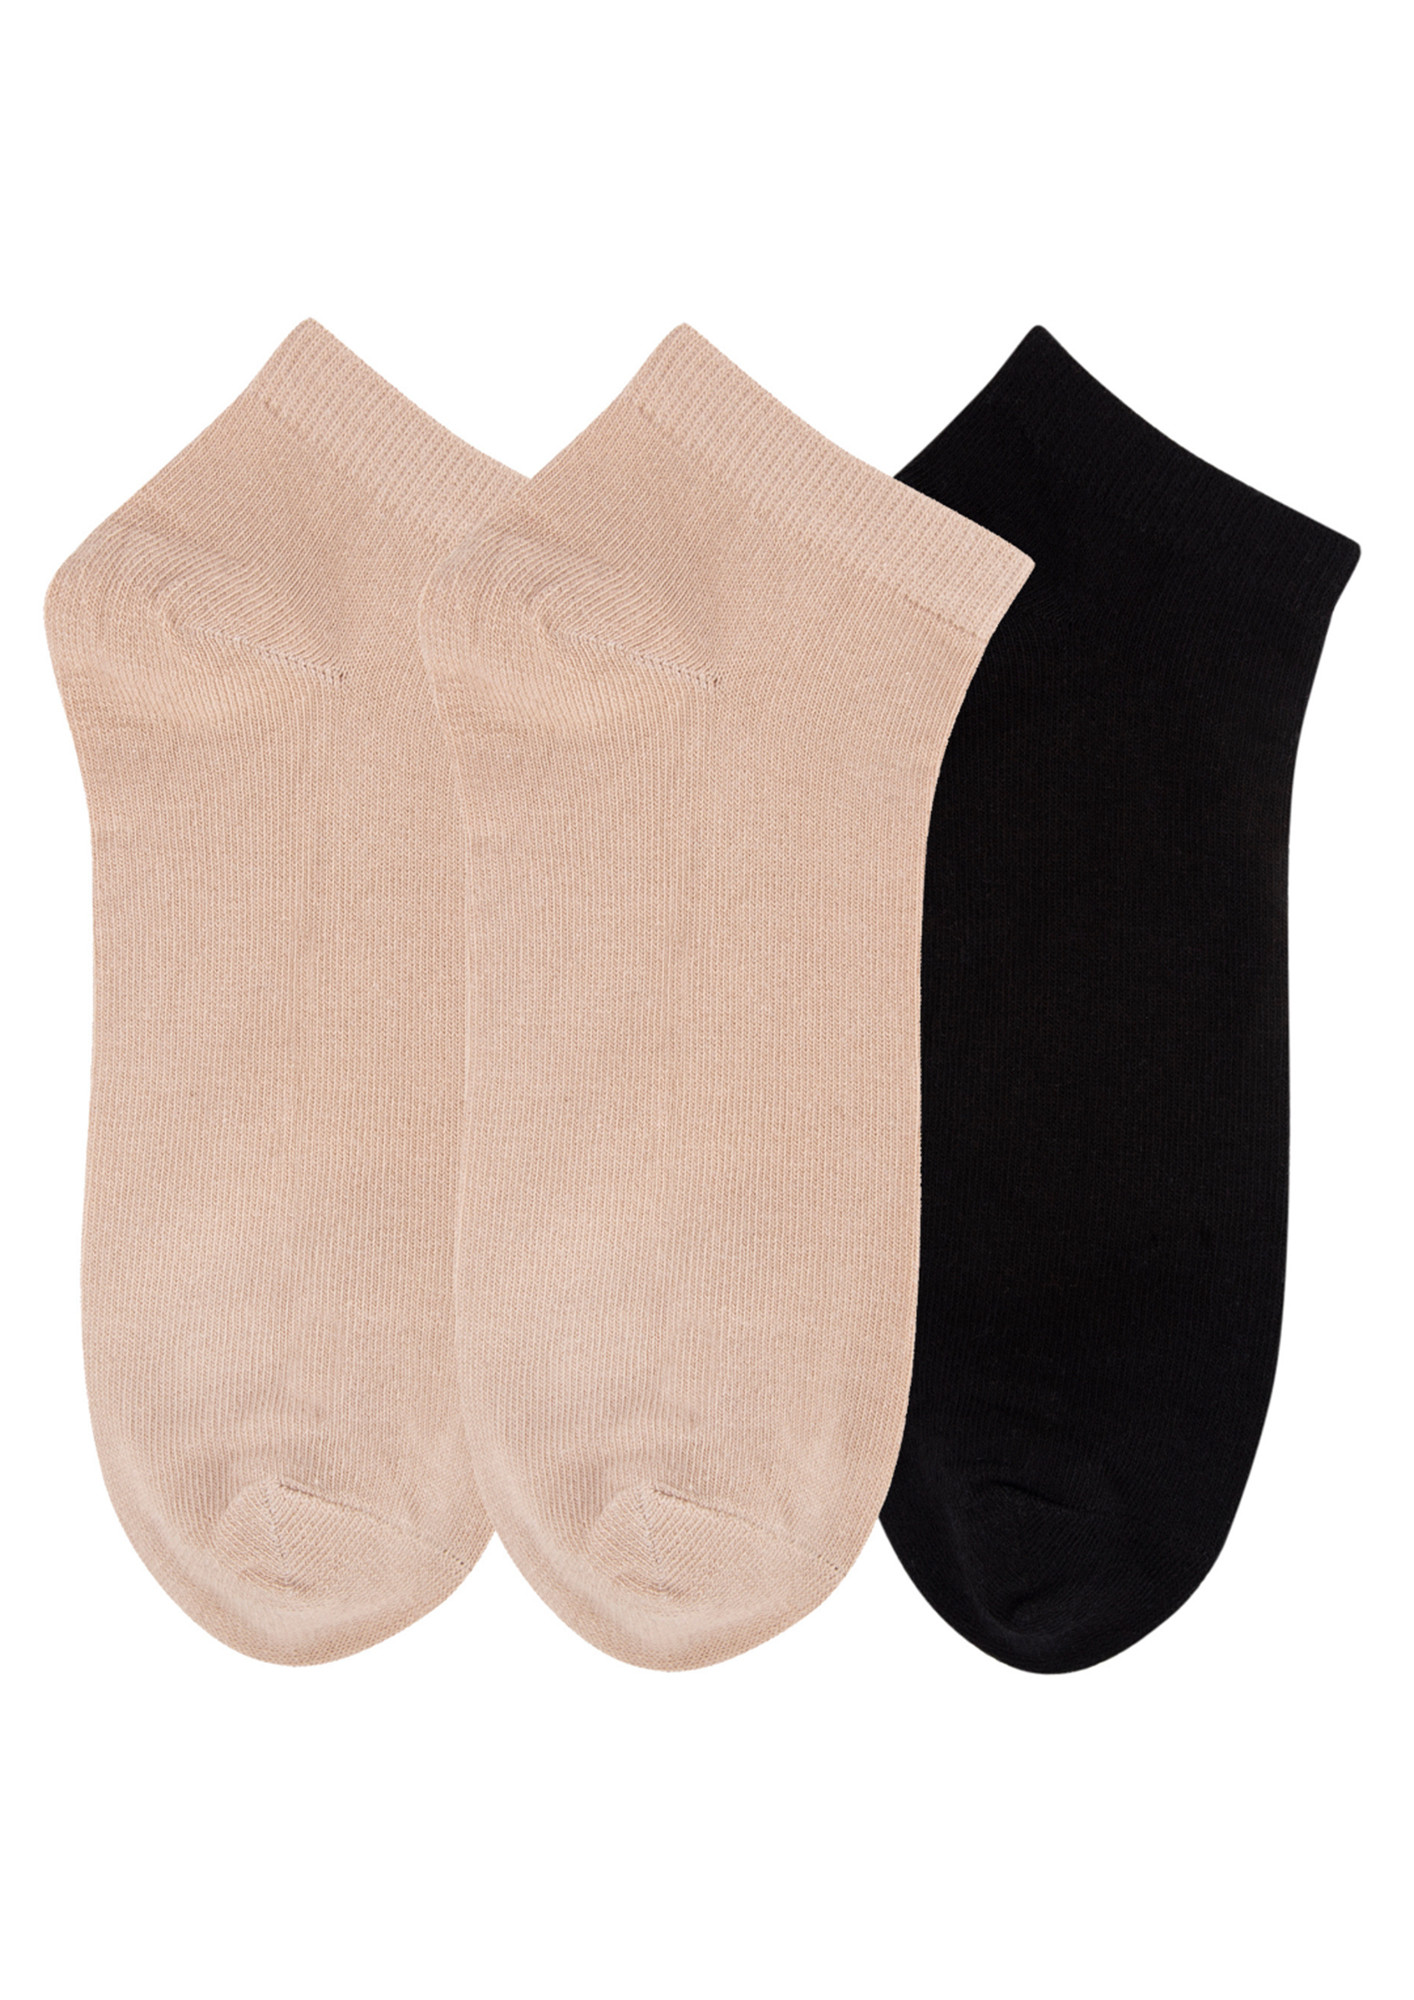 N2S NEXT2SKIN Women's Low Ankle Length Cotton Socks-Pack of 3 (Skin:Black:Skin)